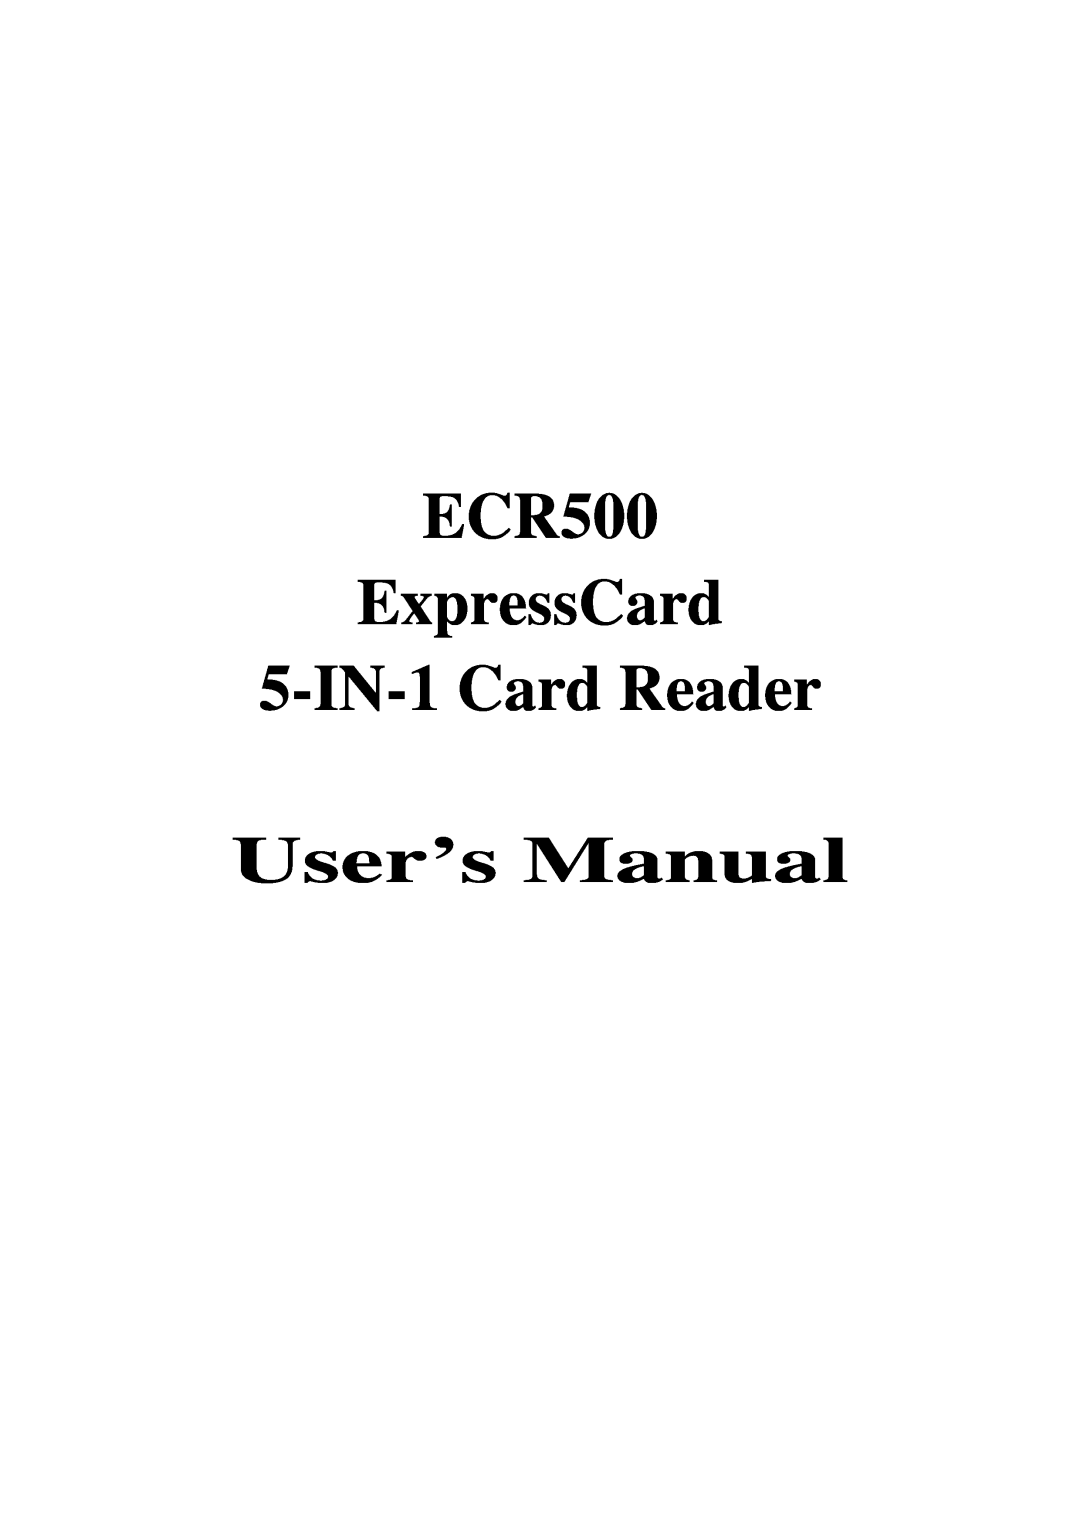 Abocom user manual ECR500 ExpressCard 5-IN-1 Card Reader User’s Manual 